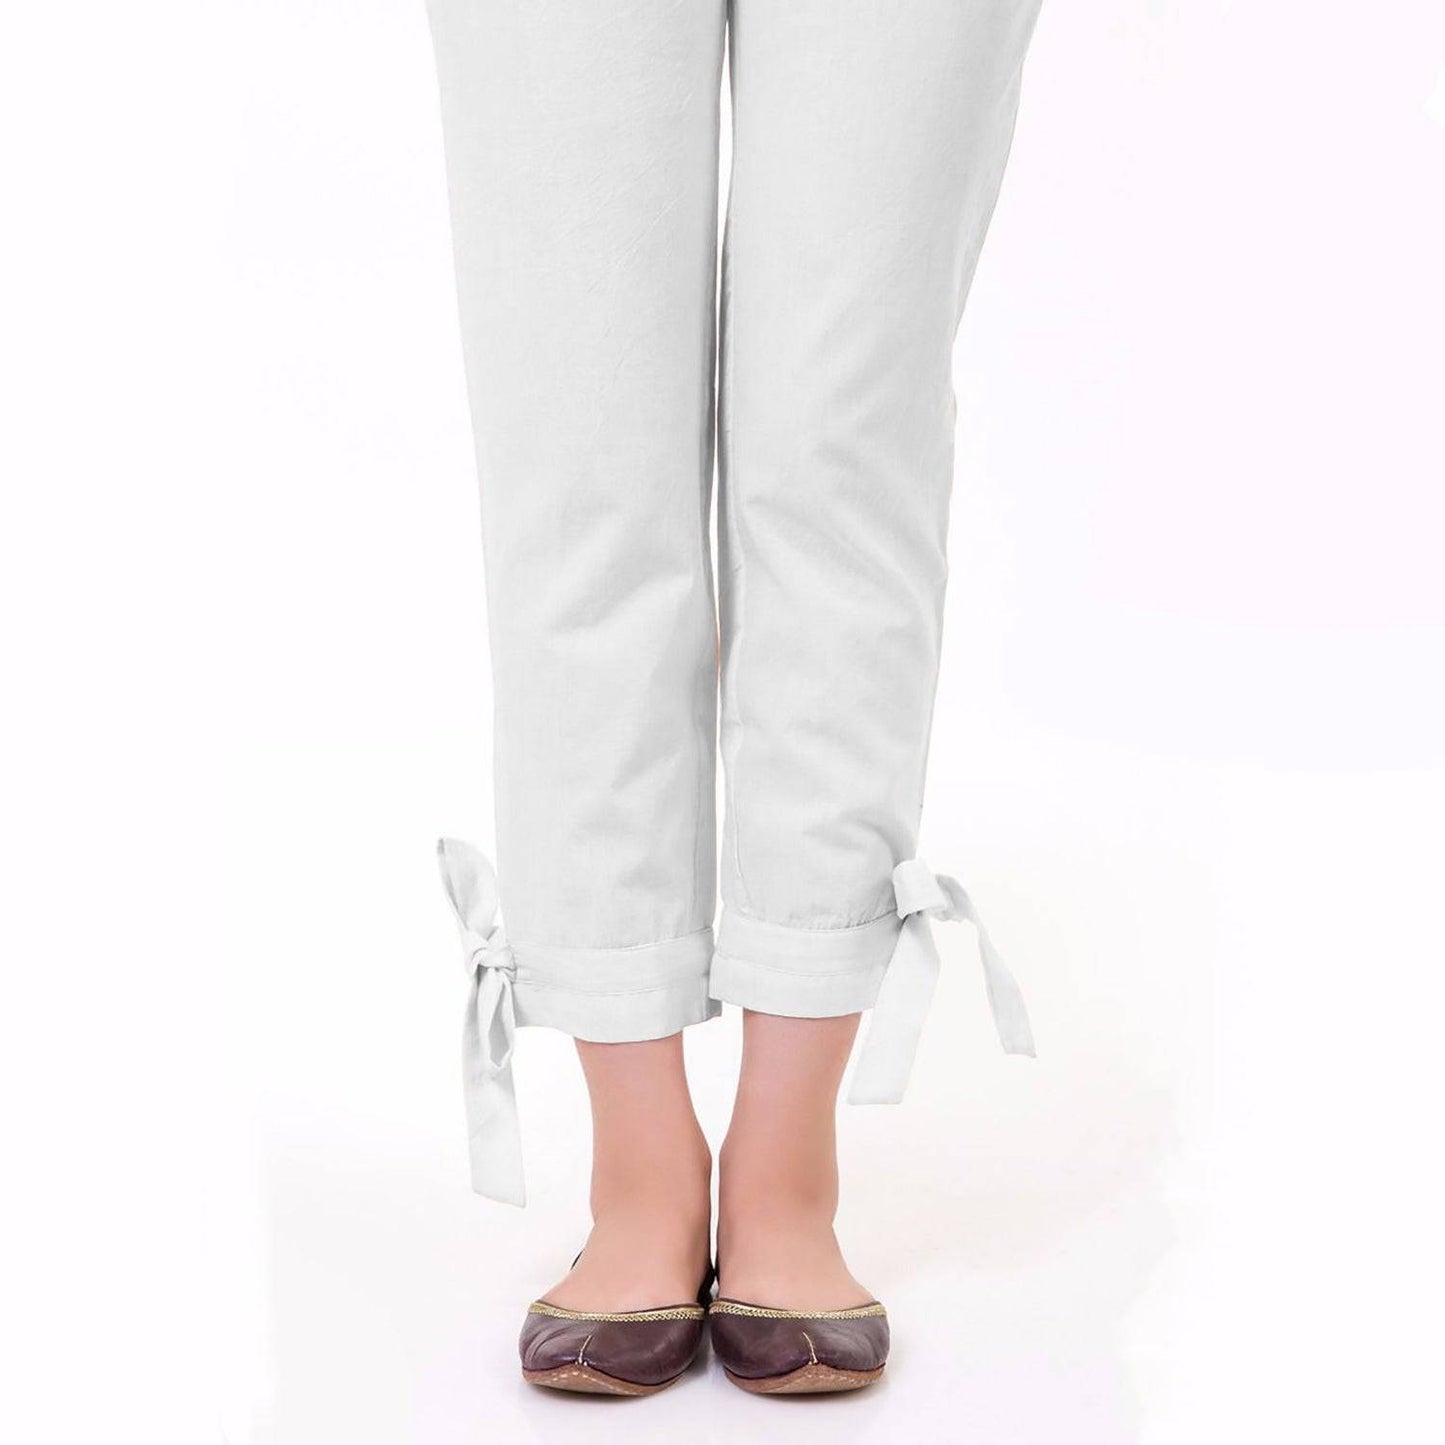 Bow Tie-up Pants / Trousers for Women in Cotton - BTP01 - Dhanak Boutique